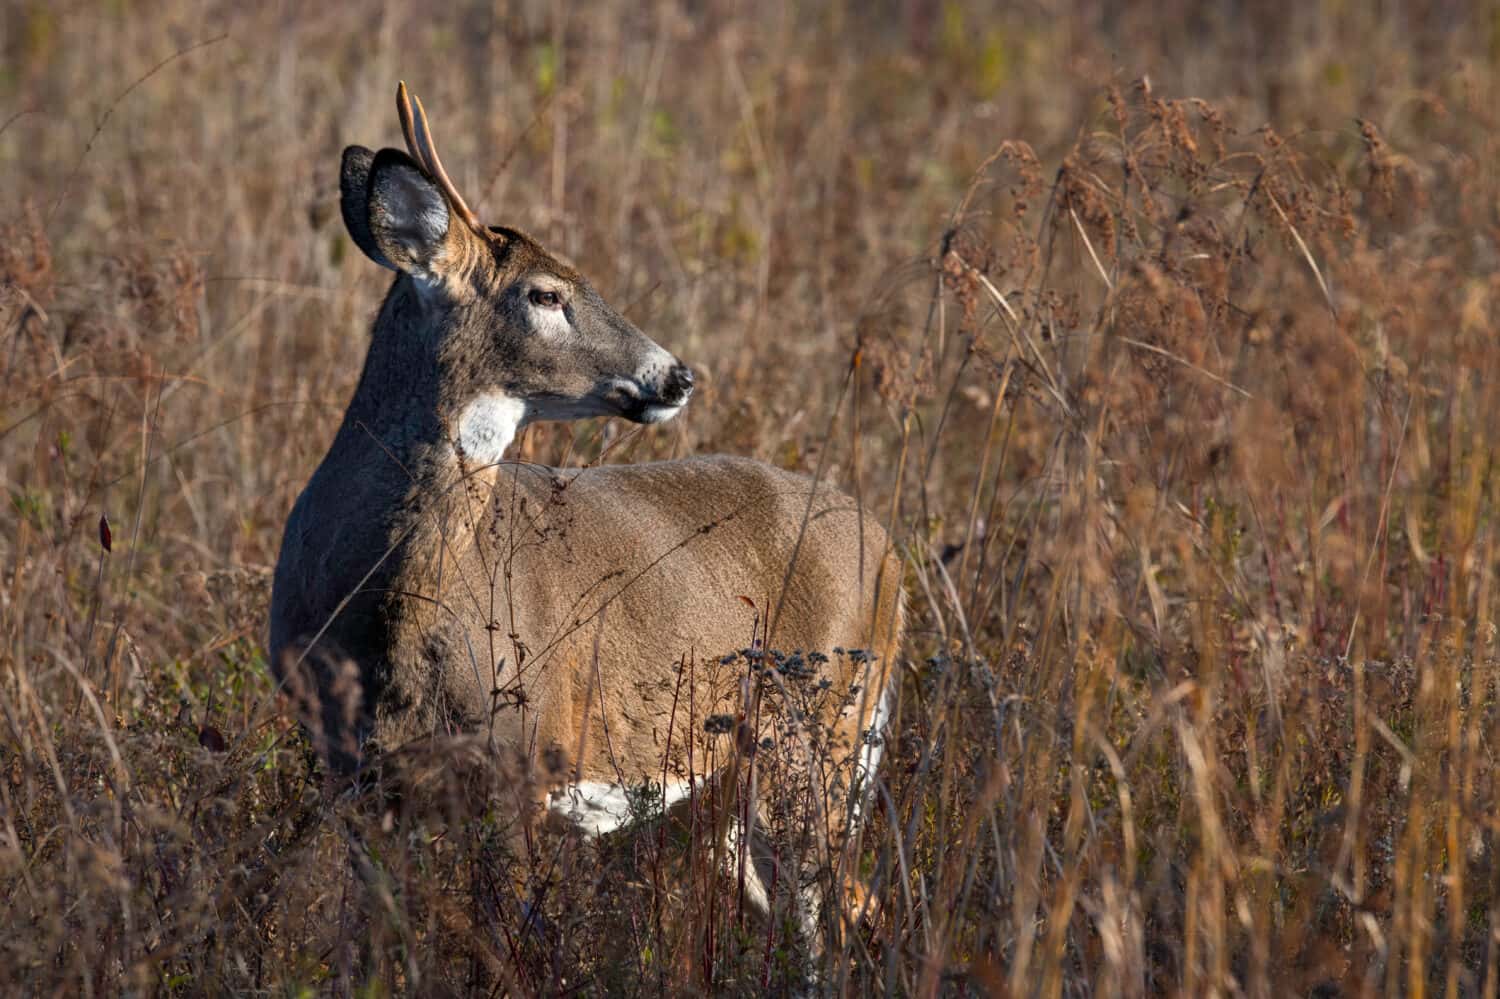 Spike horn whitetail deer buck in a field.